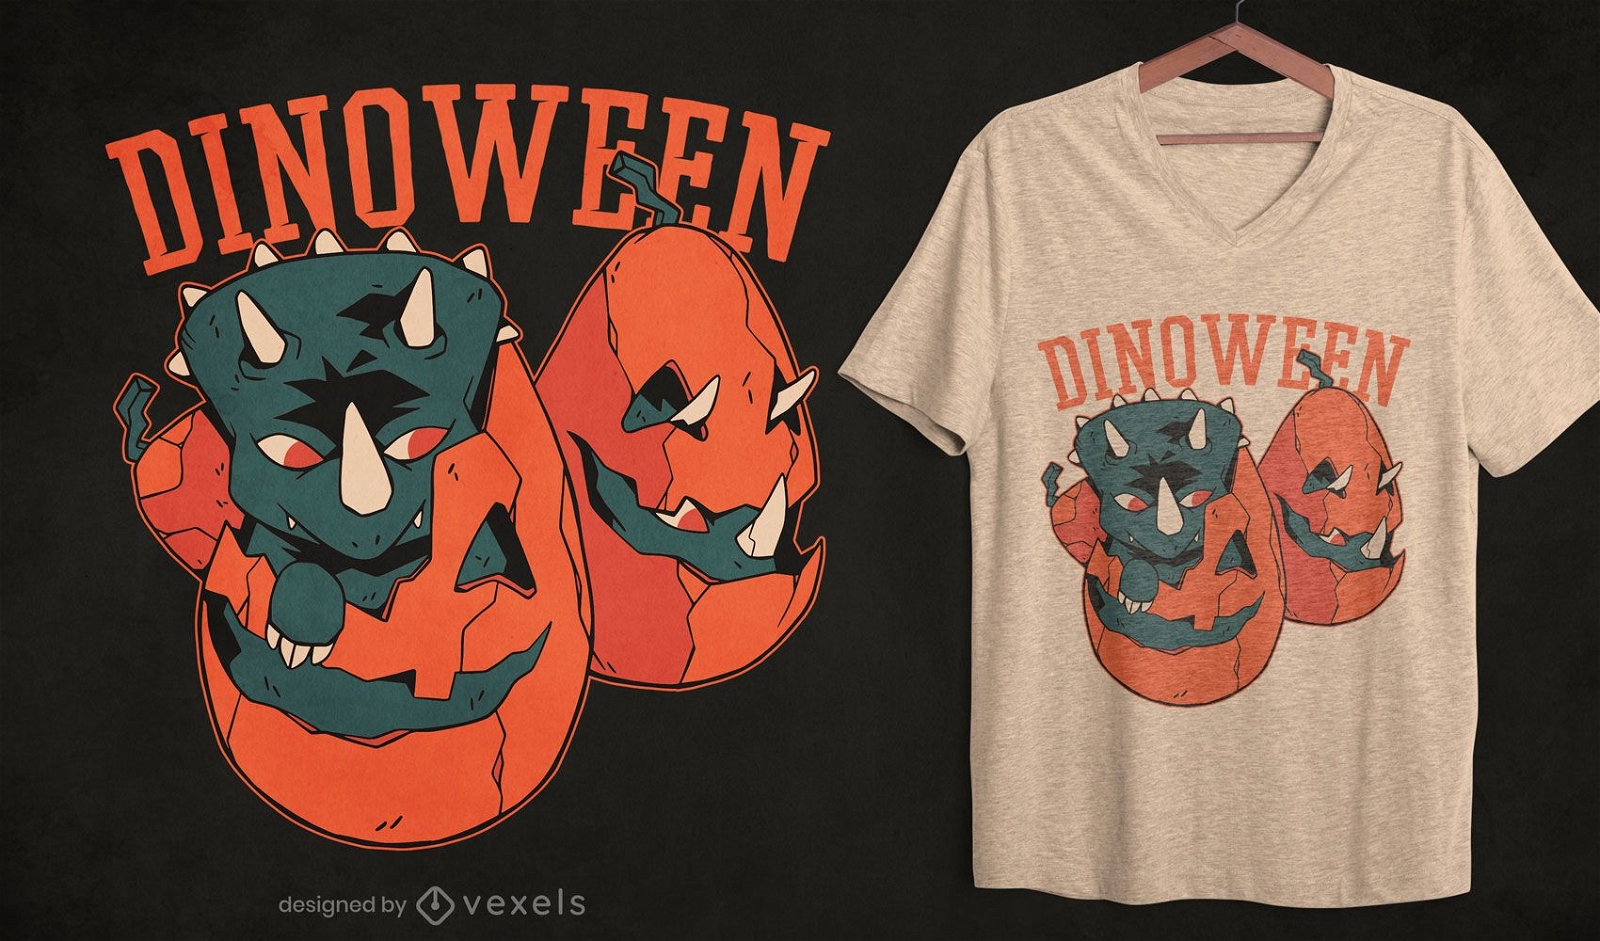 Dinoween t-shirt design